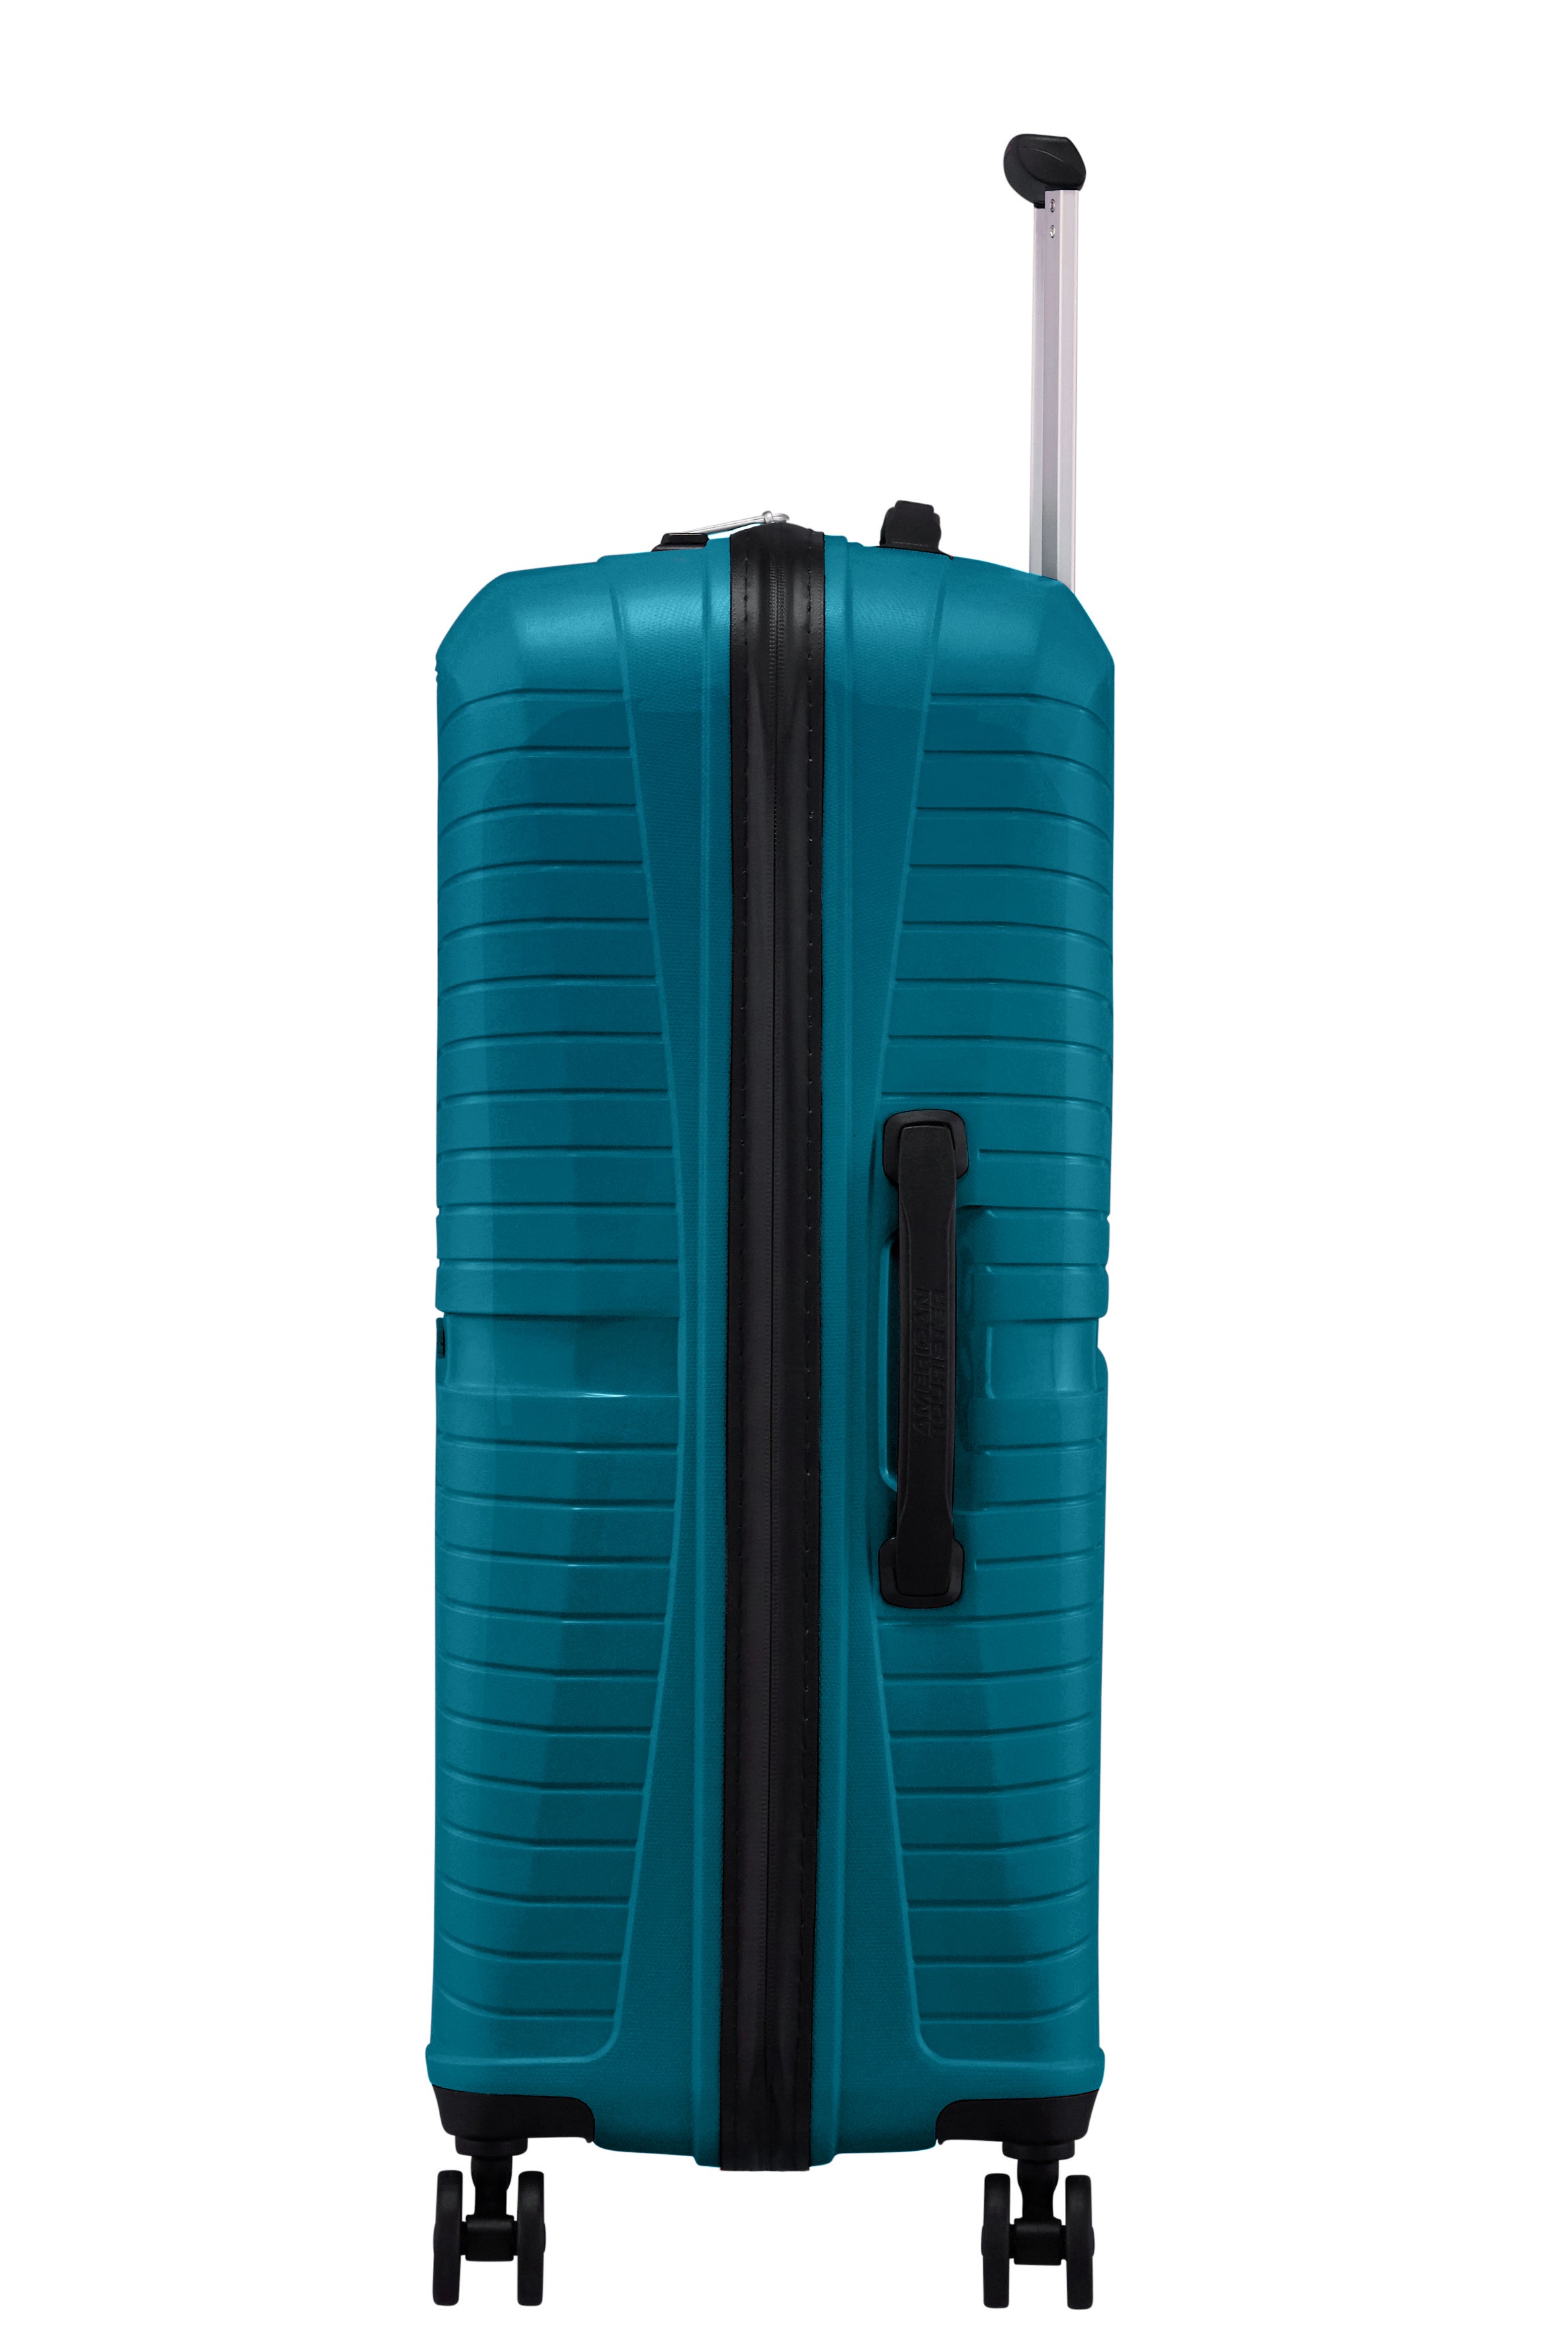 American Tourister - Airconic 67cm Medium Suitcase - Deep Ocean-3